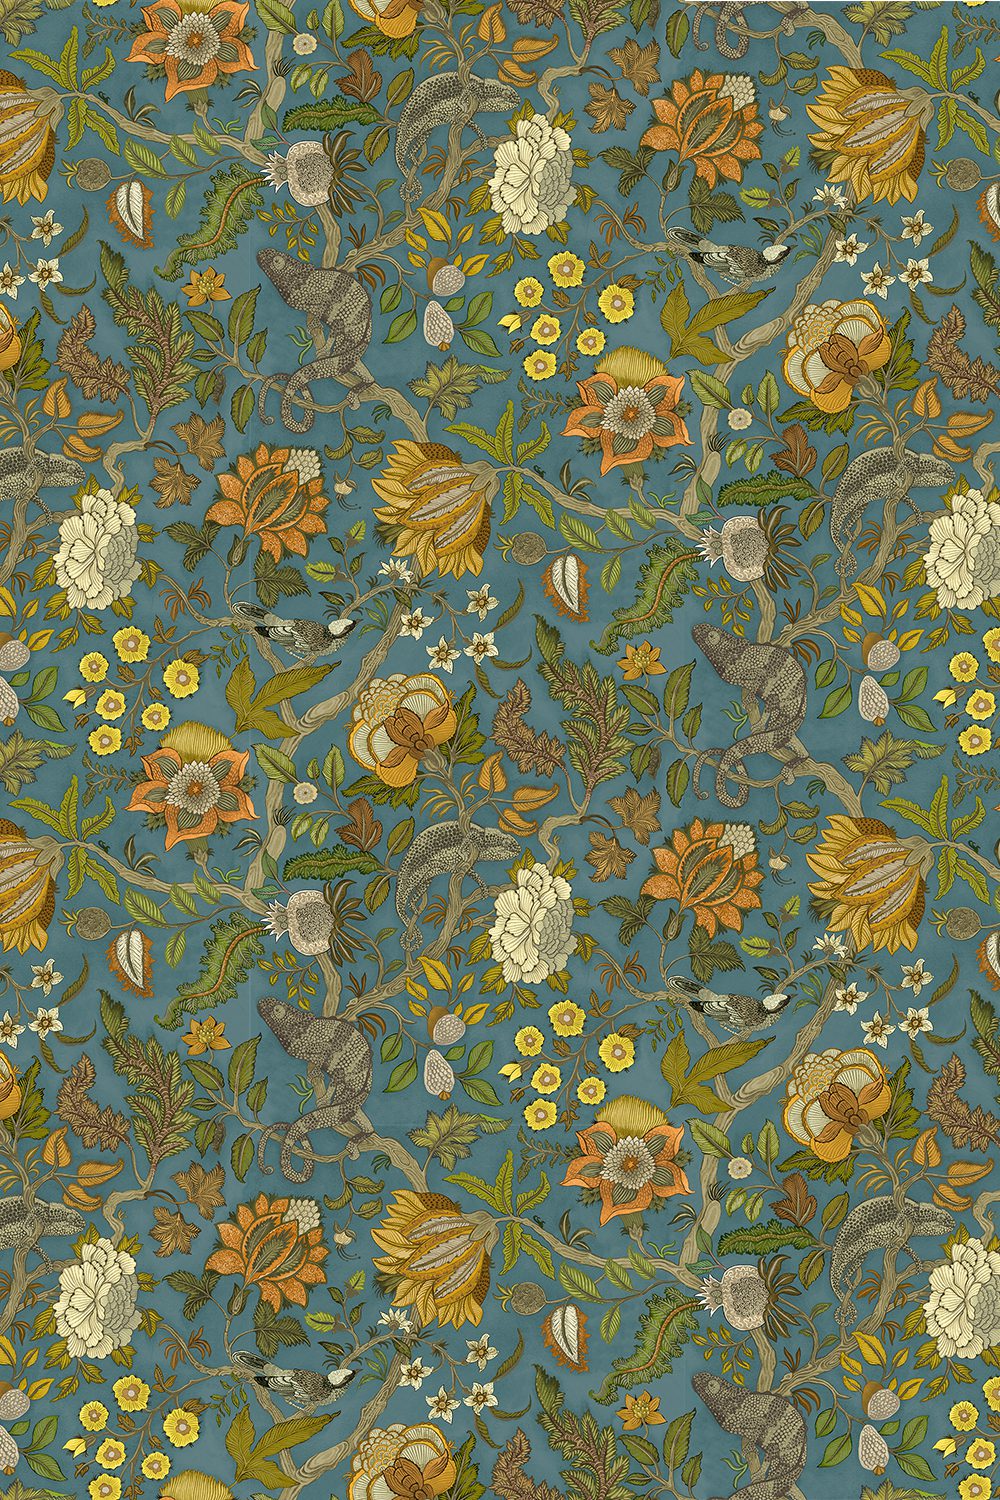 Josephine-munsey-wallpapers-interiors-chameleon-trail-floral-green-teal-orange-wallpaper